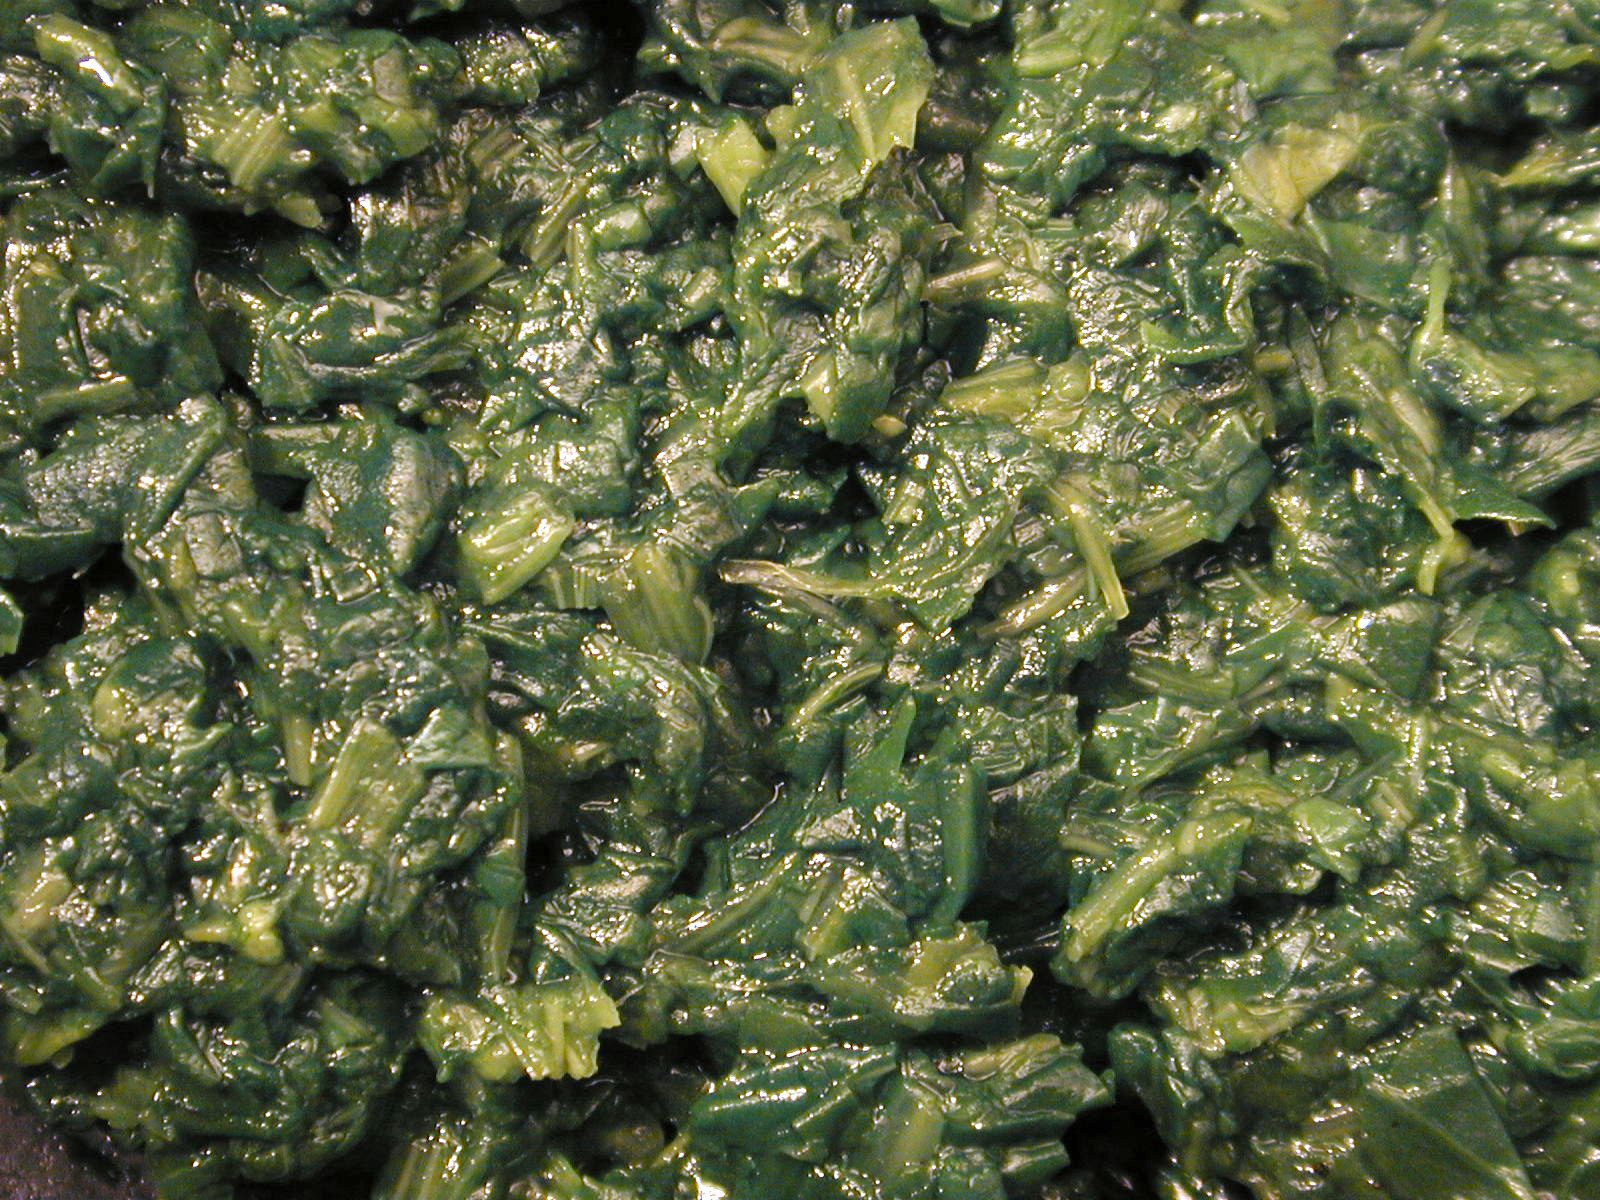 spinach coocked vegetable food goo texture yuk healthy green